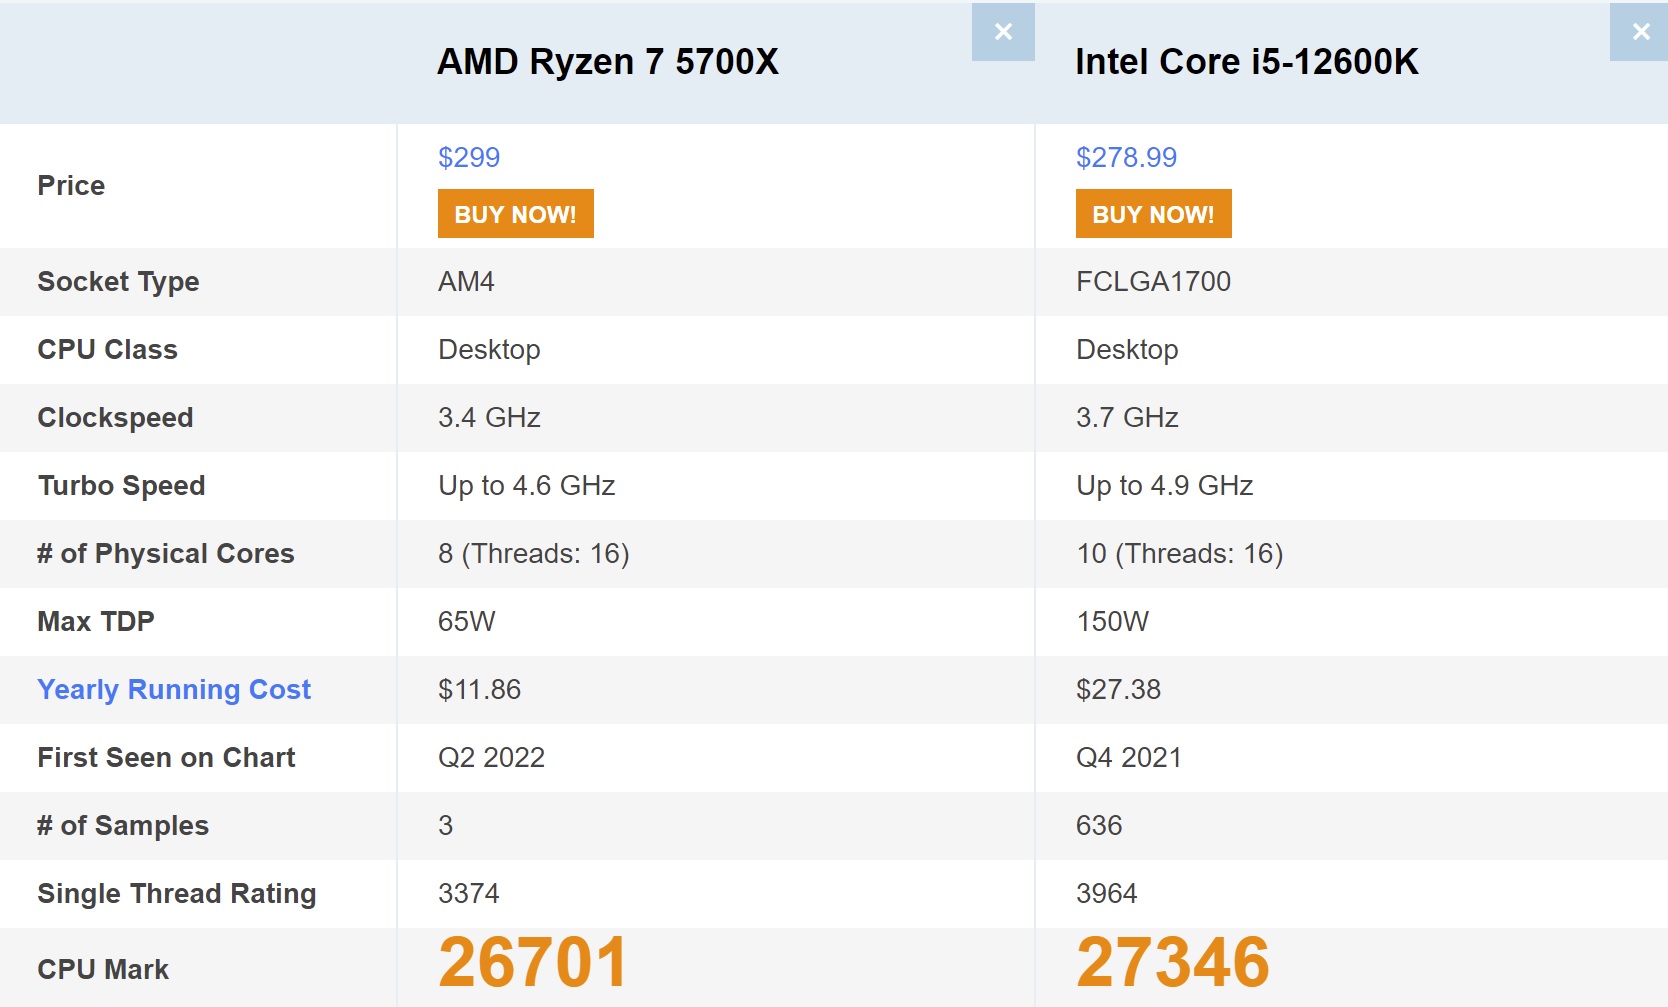 AMD Ryzen 5 5600X claims the top score in Passmark single-thread benchmark  